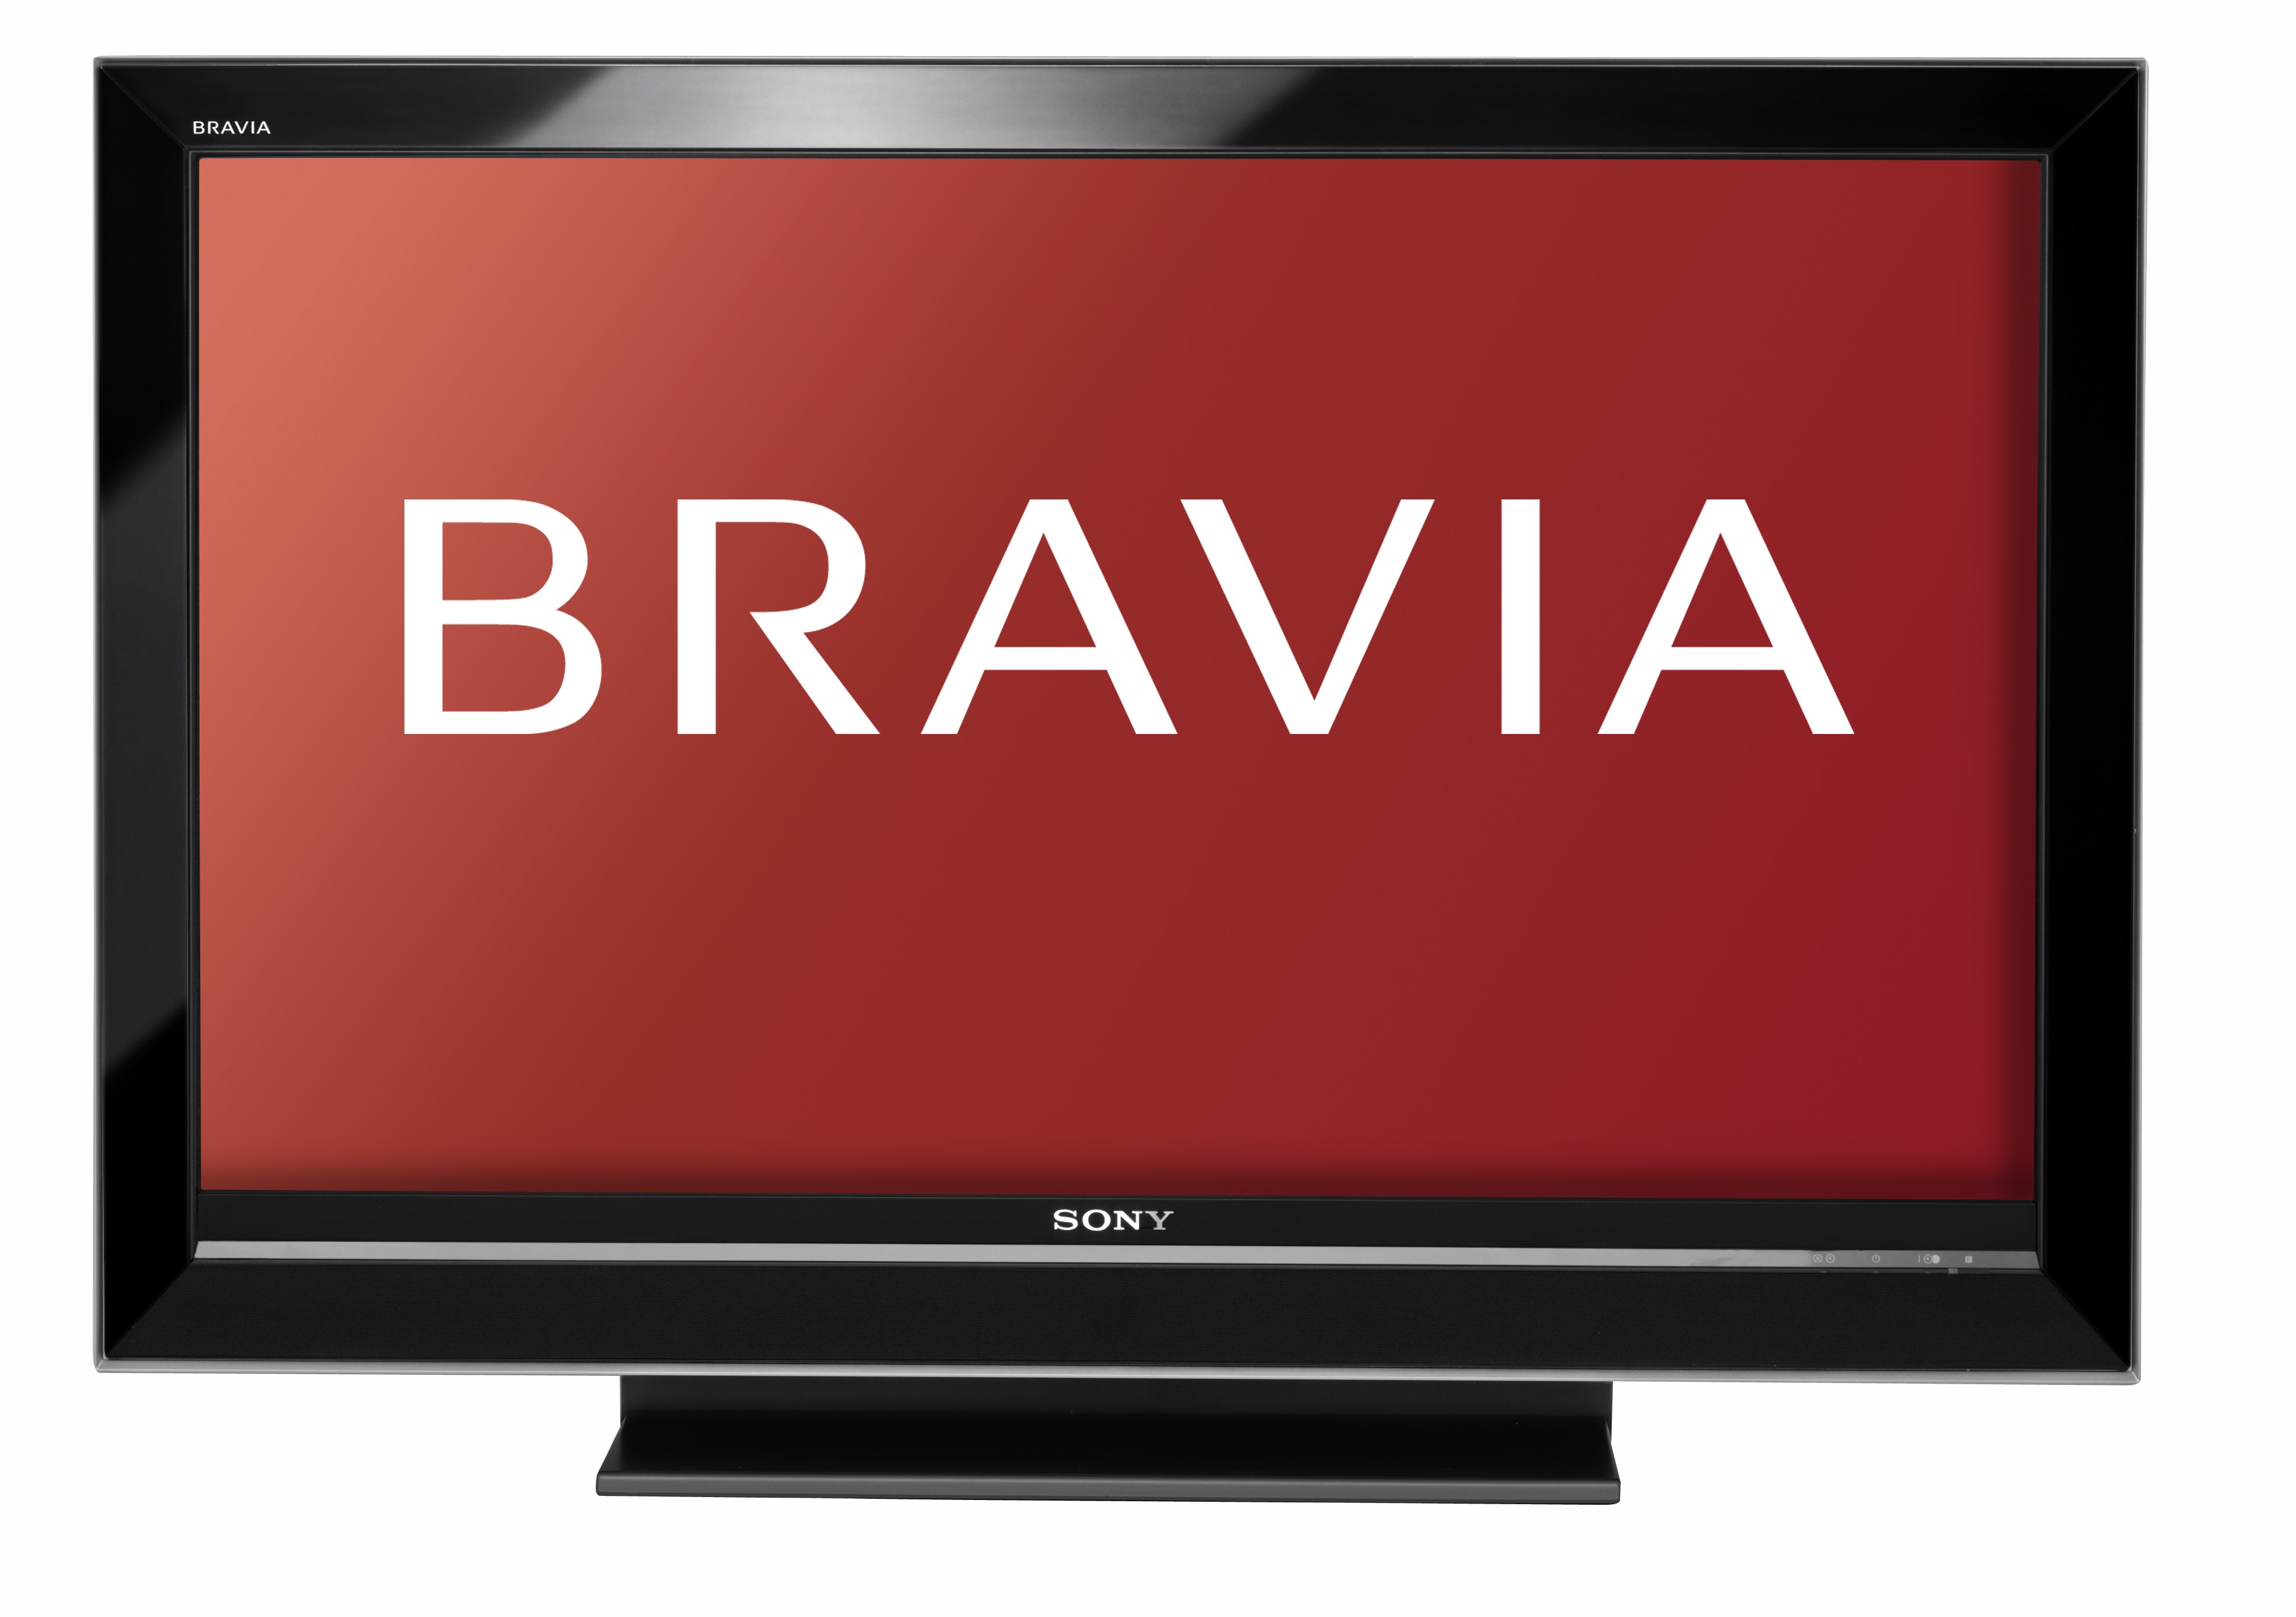 Телевизор sony бравиа. Sony Bravia телевизор. Телевизор Sony Bravia 40. Телевизор Sony Bravia 32. Сони бравиа телевизор 2008.